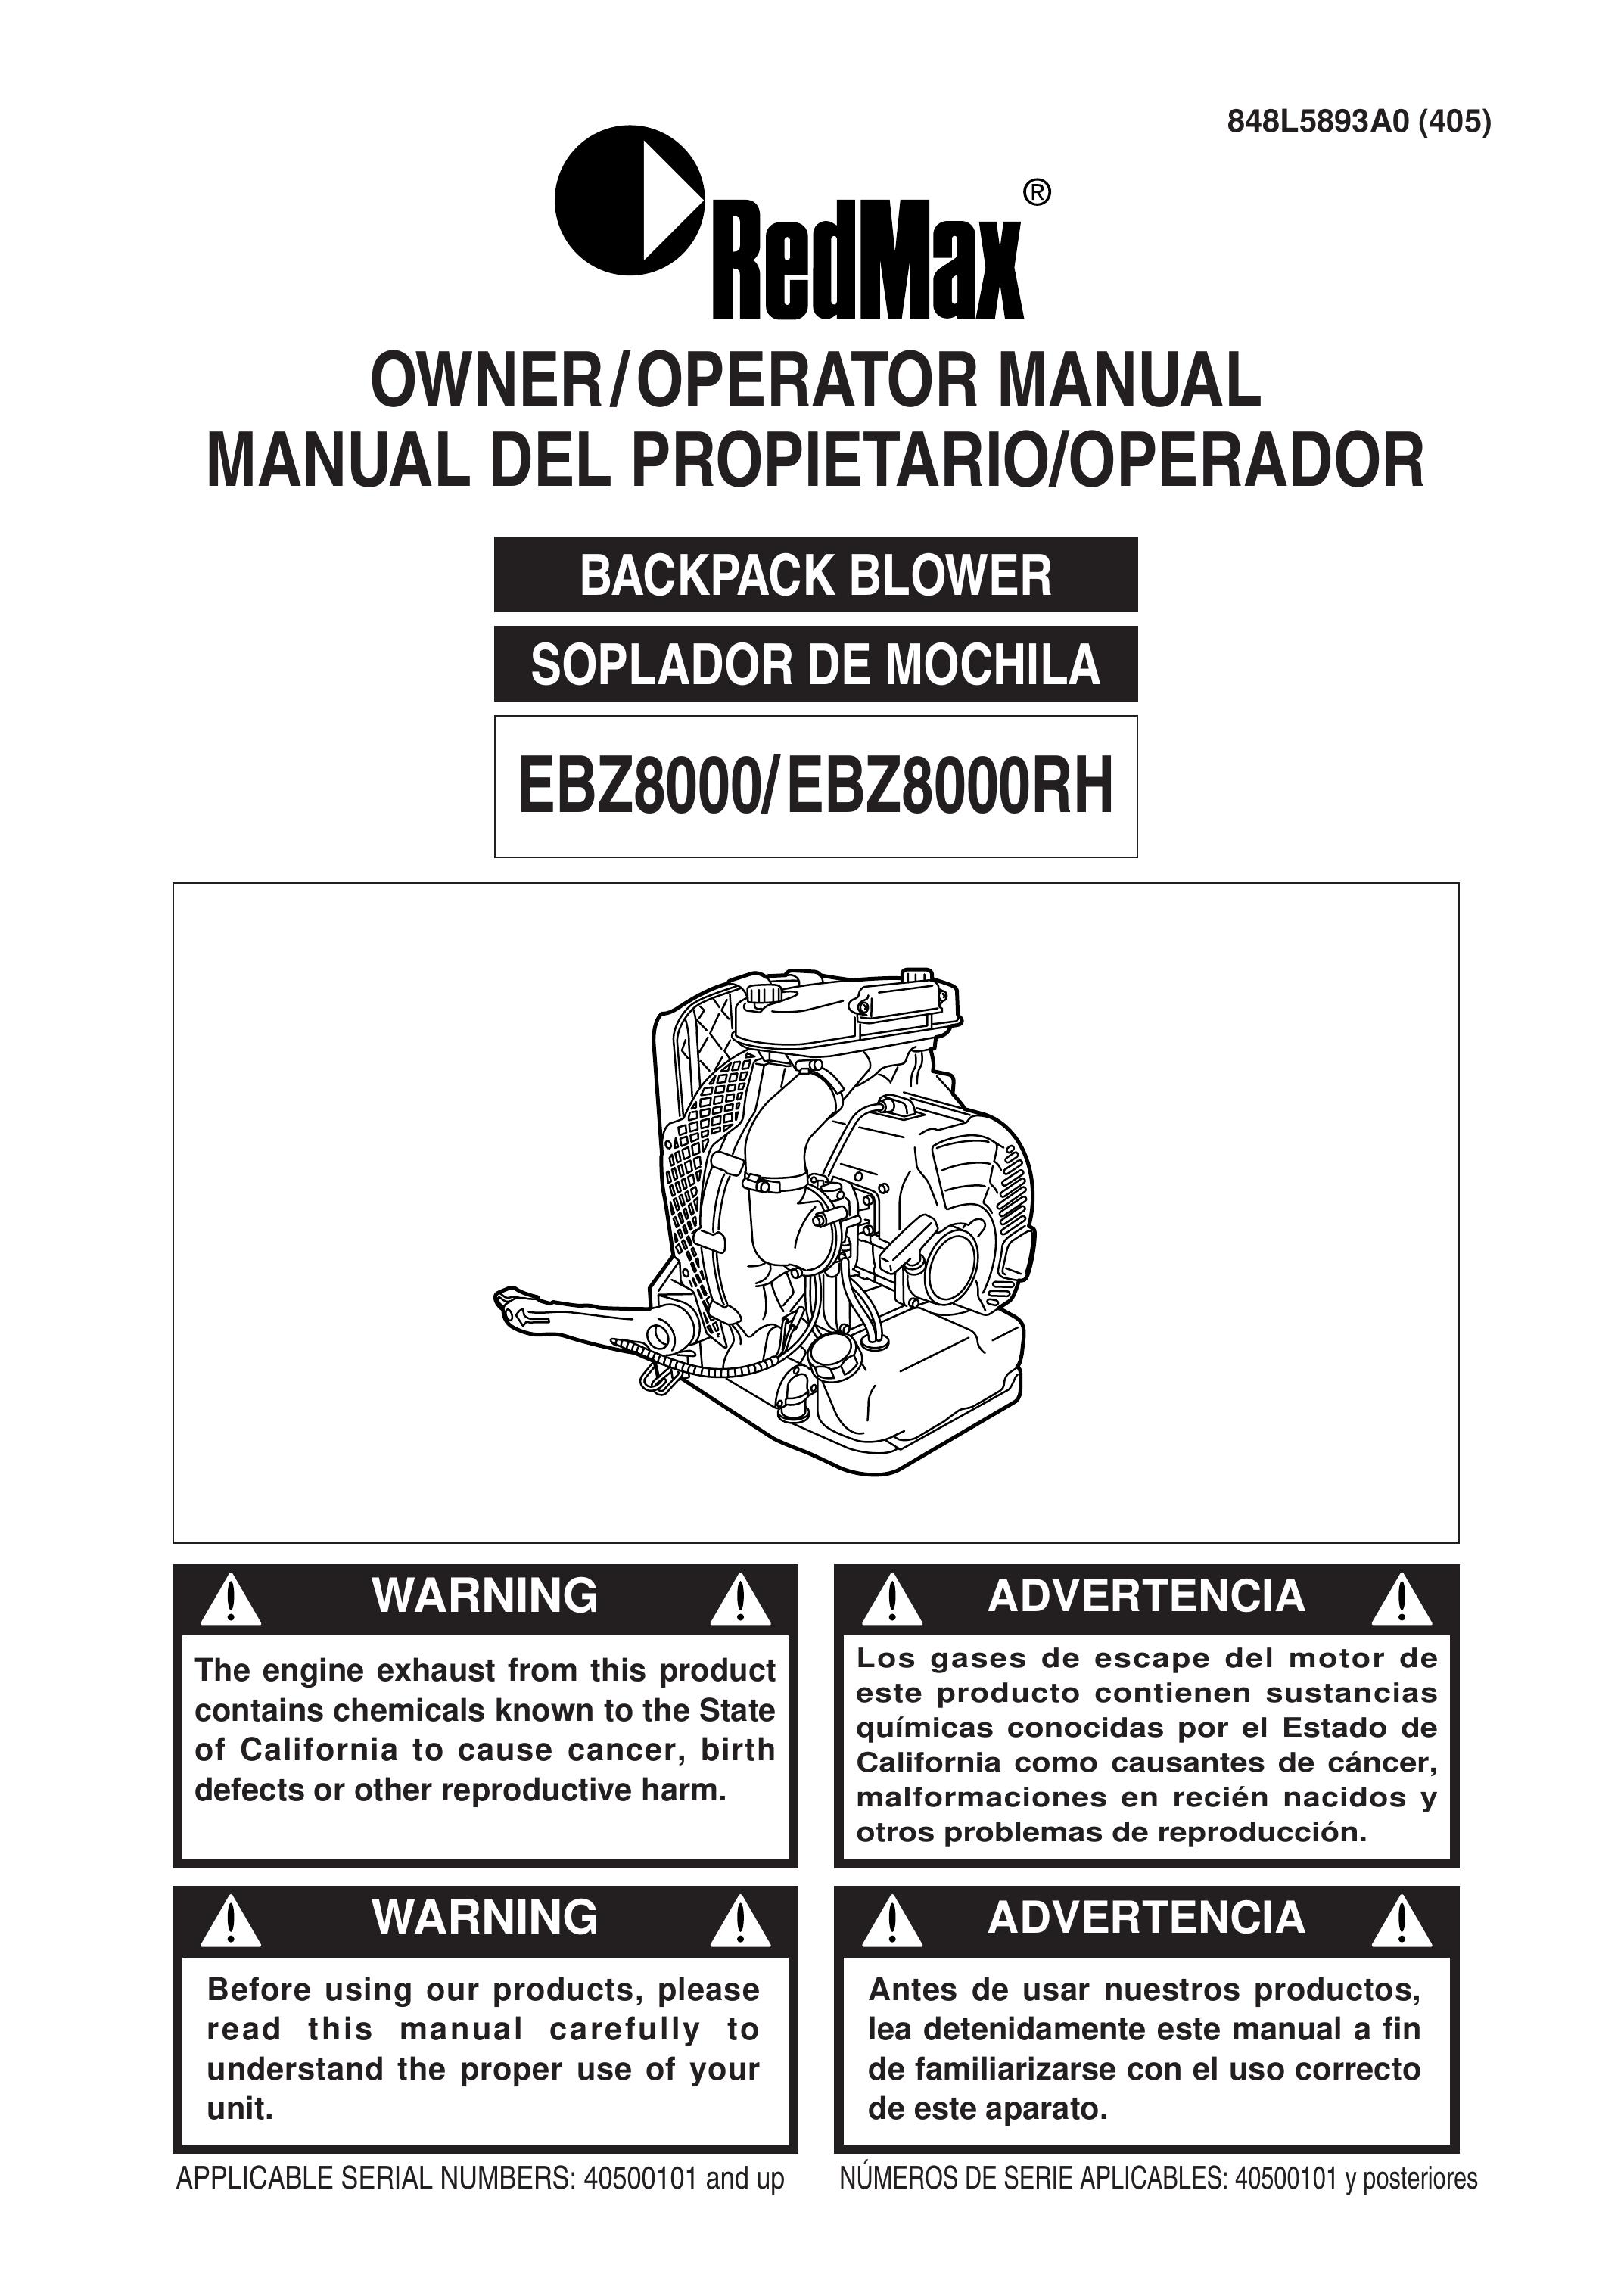 RedMax EBZ8000 Blower User Manual